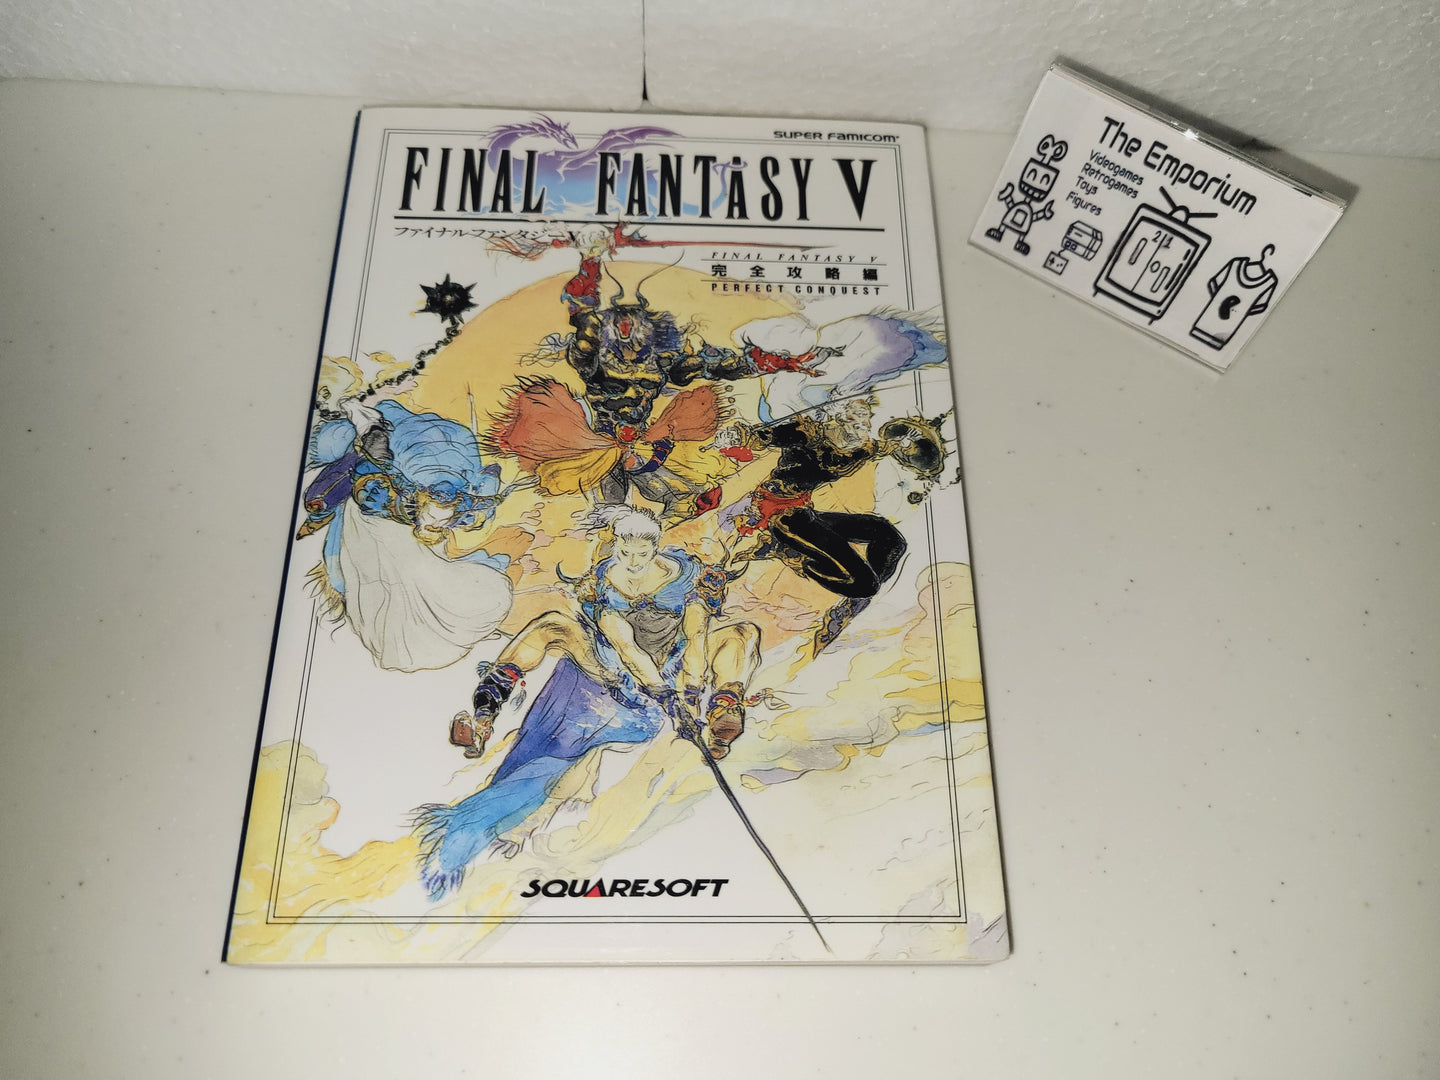 michela - Final Fantasy V Perfect Conquest book  - book